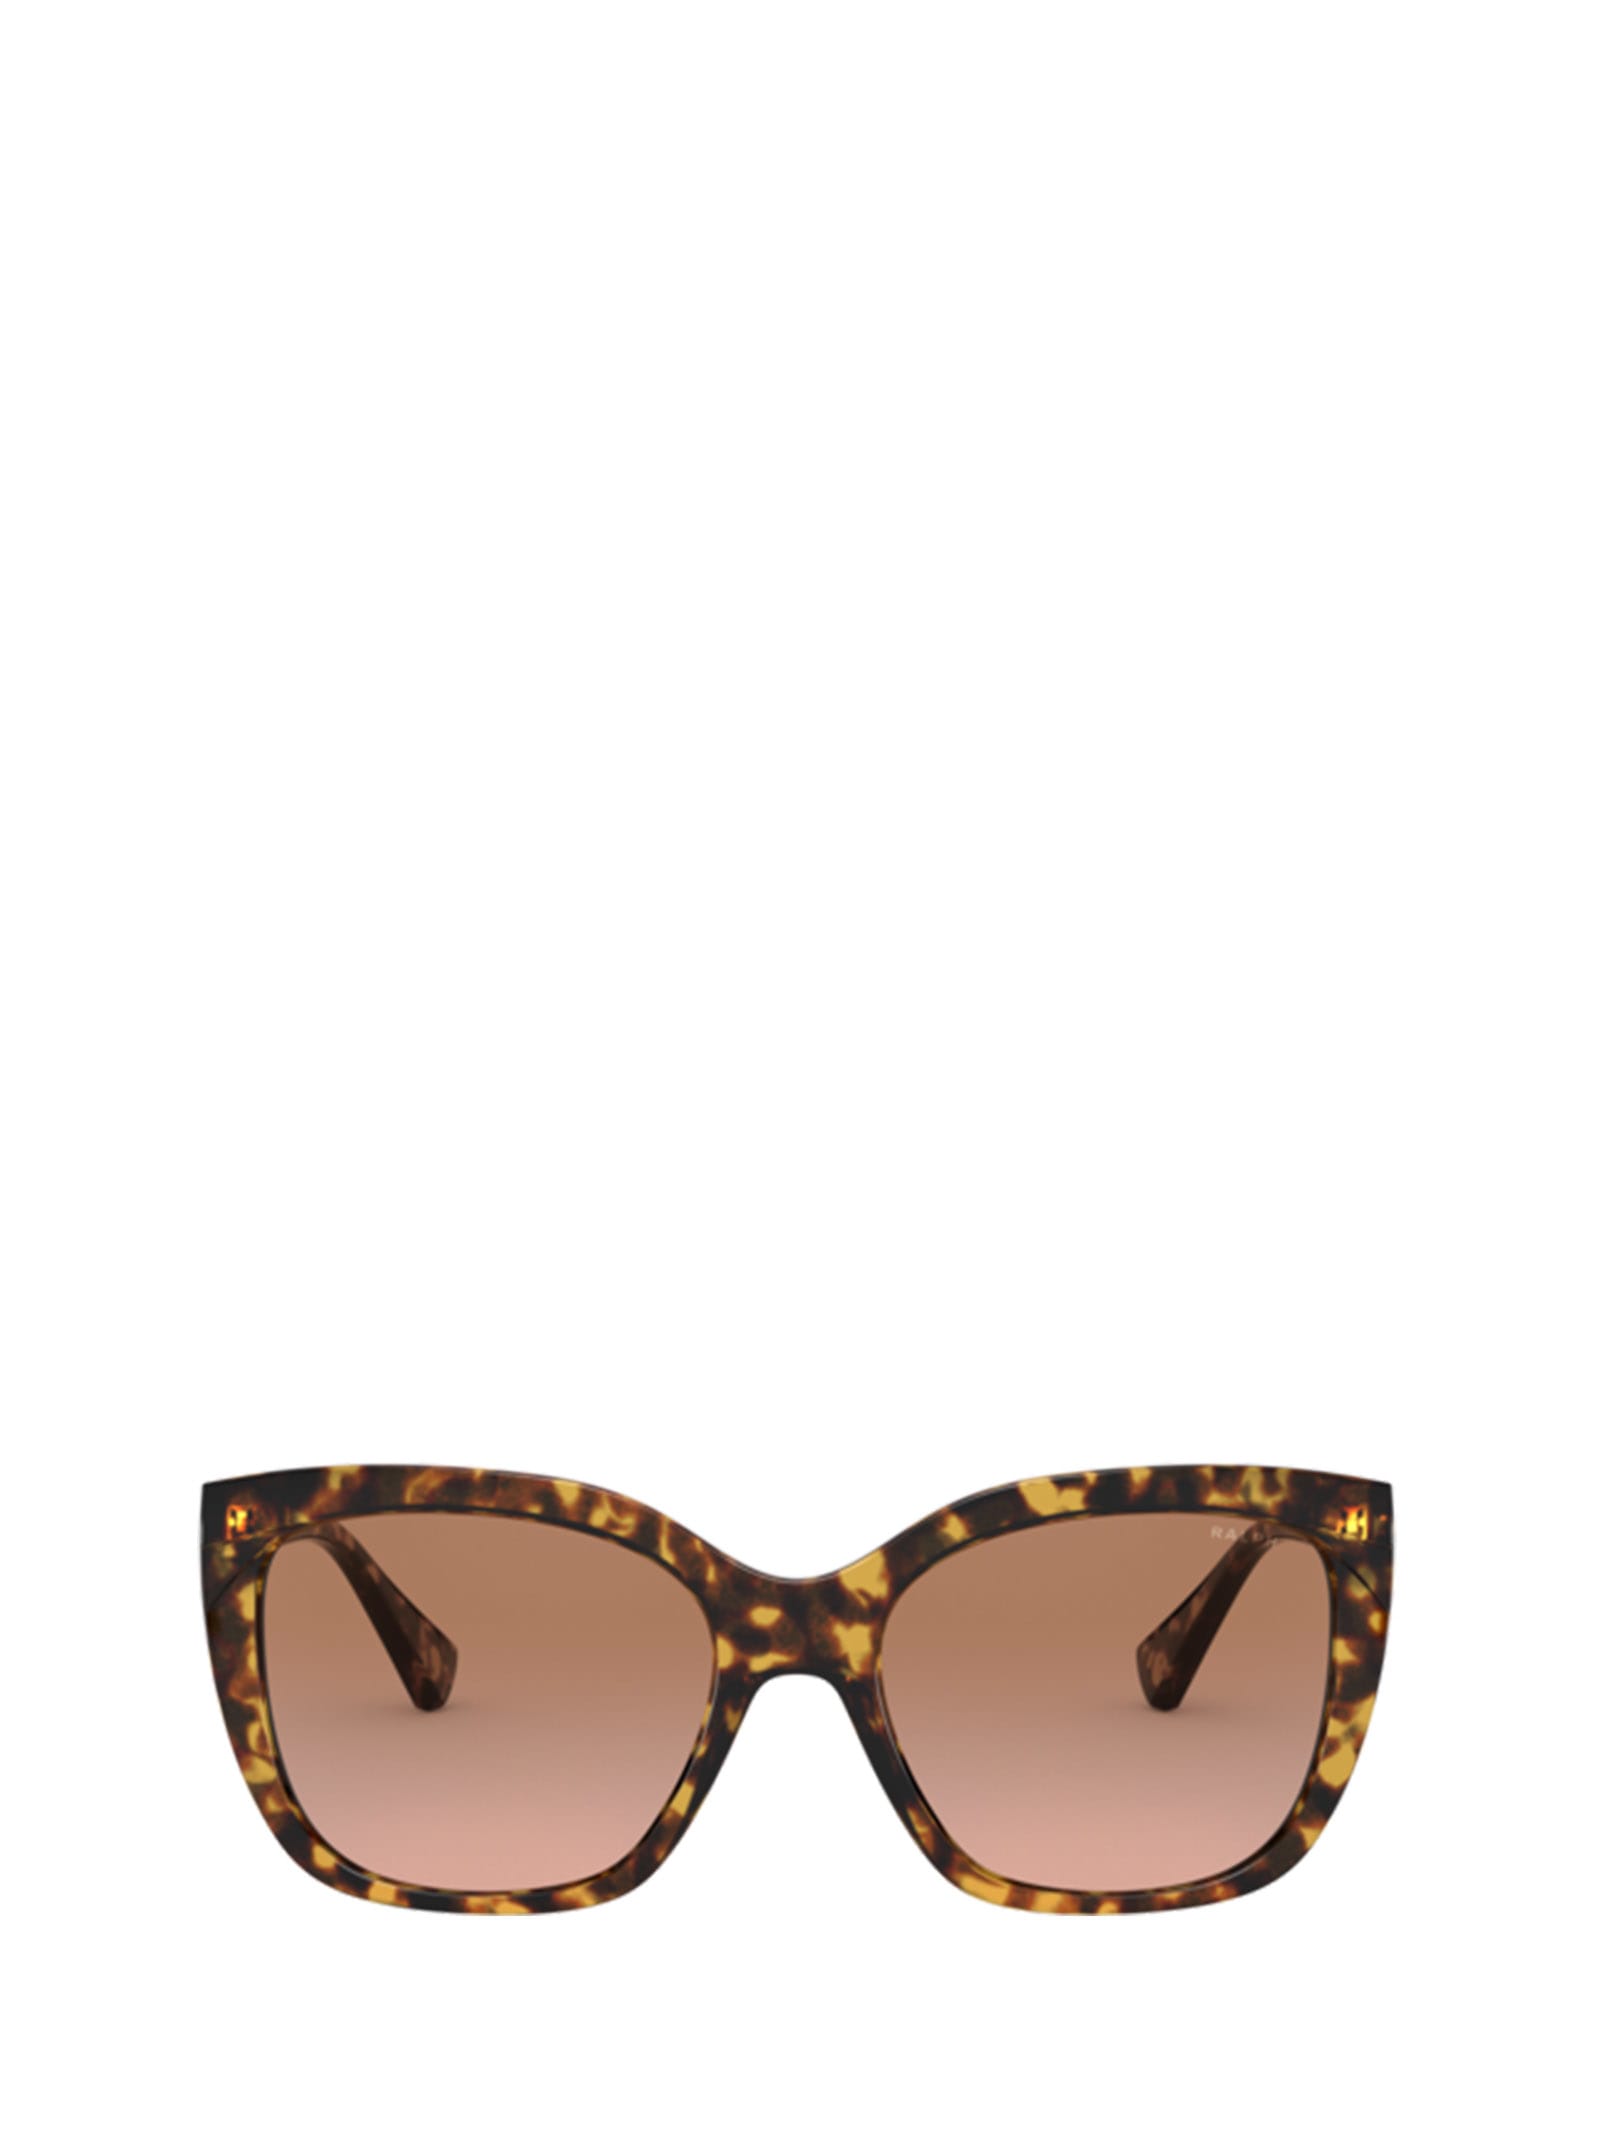 Polo Ralph Lauren Ra5265 Shiny Sponged Havana Sunglasses